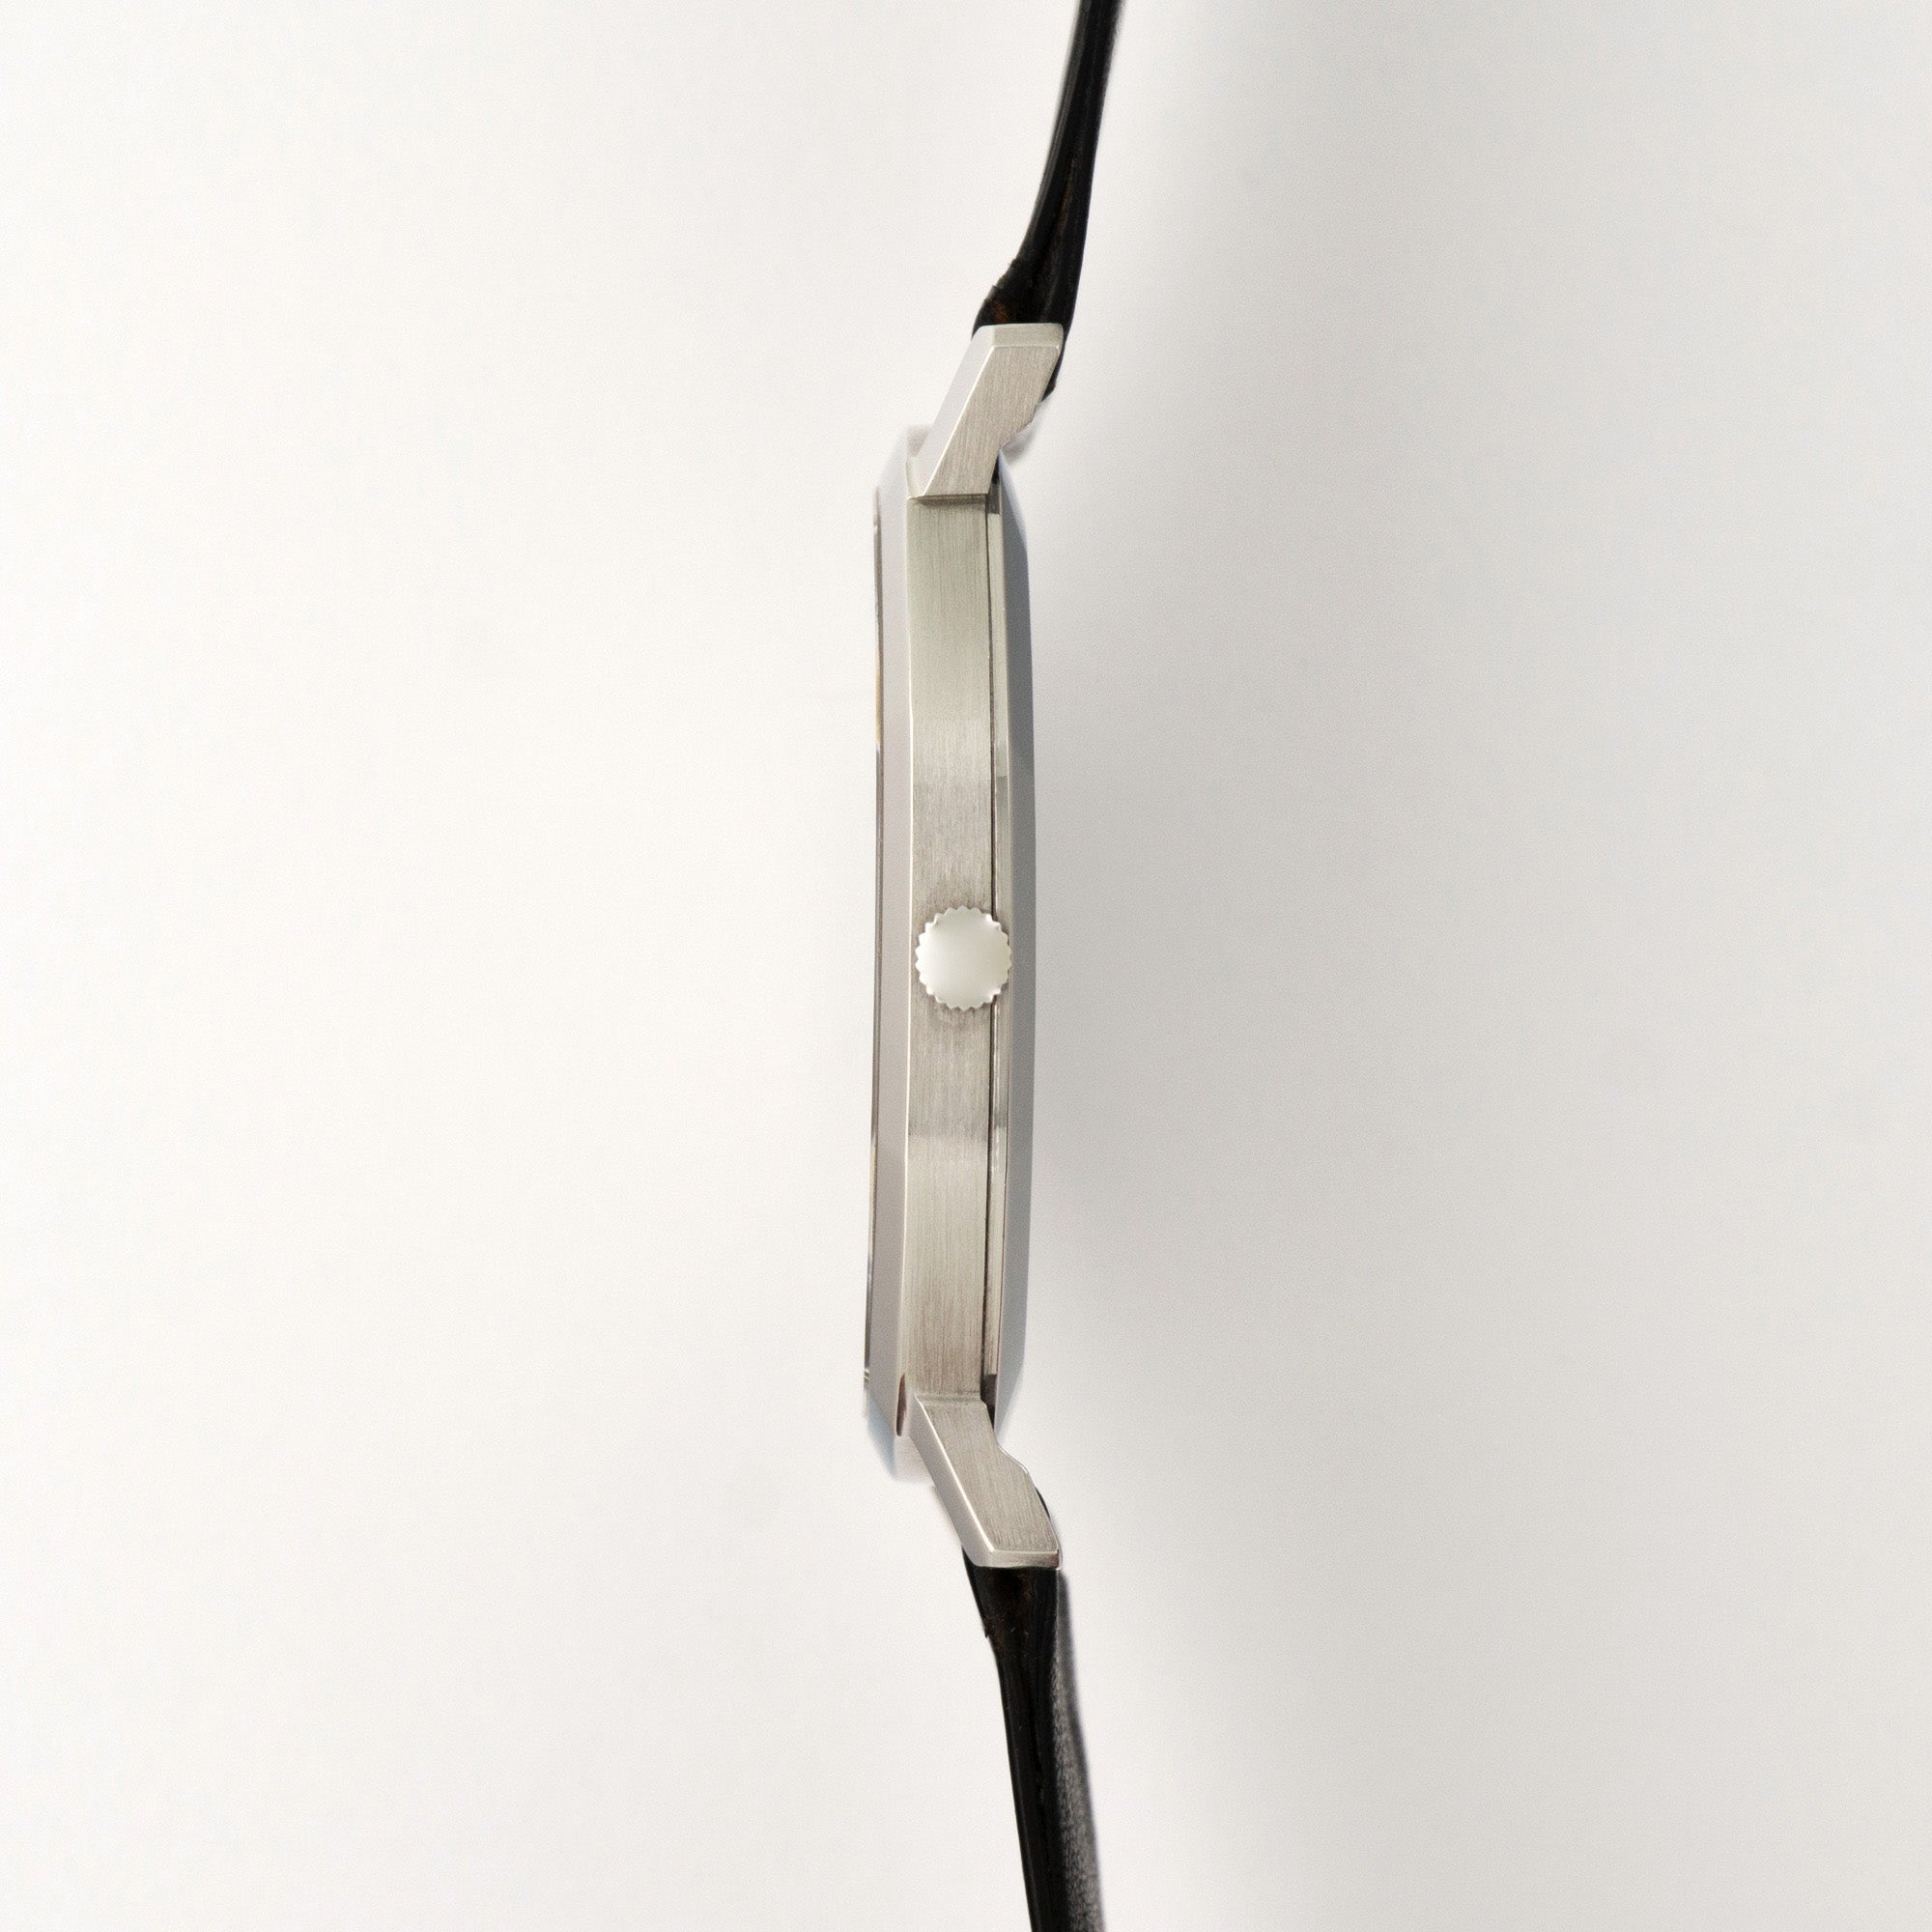 Audemars Piguet - Audemars Piguet Steel Unusual Shape Strap Watch - The Keystone Watches